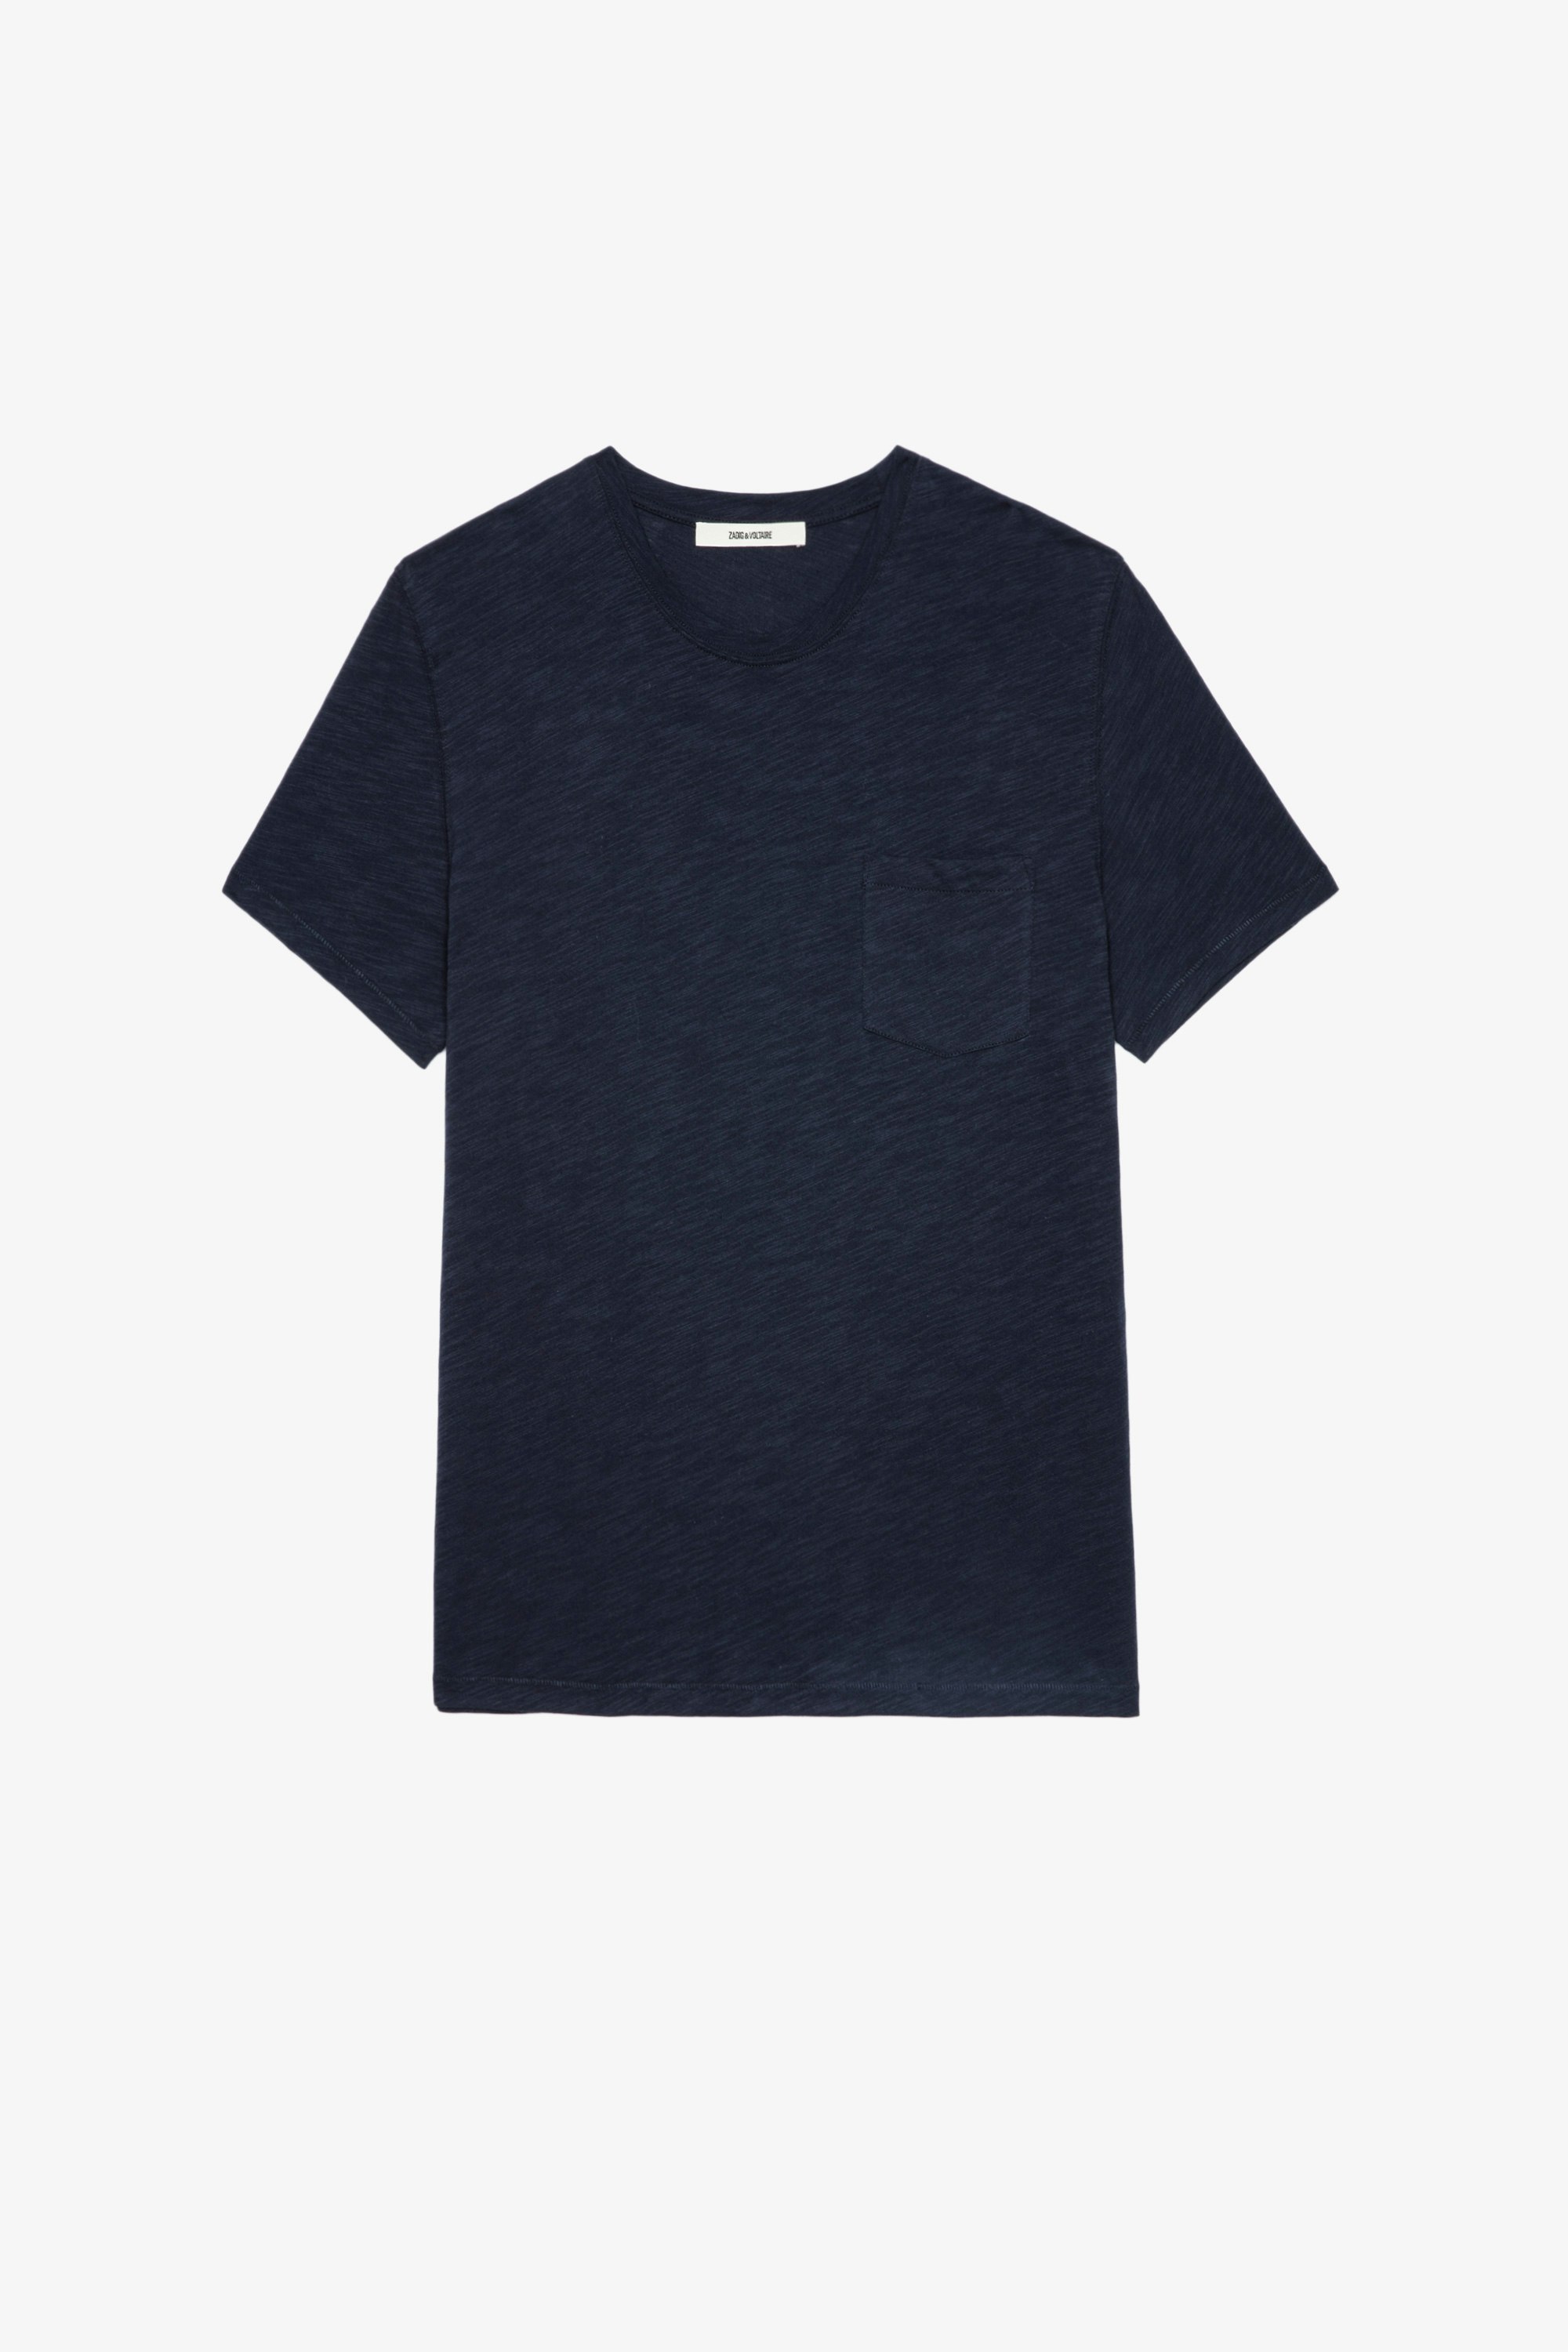 Stockholm Slub T-Shirt Navy blue cotton slub T-shirt with a patch pocket and a flocked skull on the back